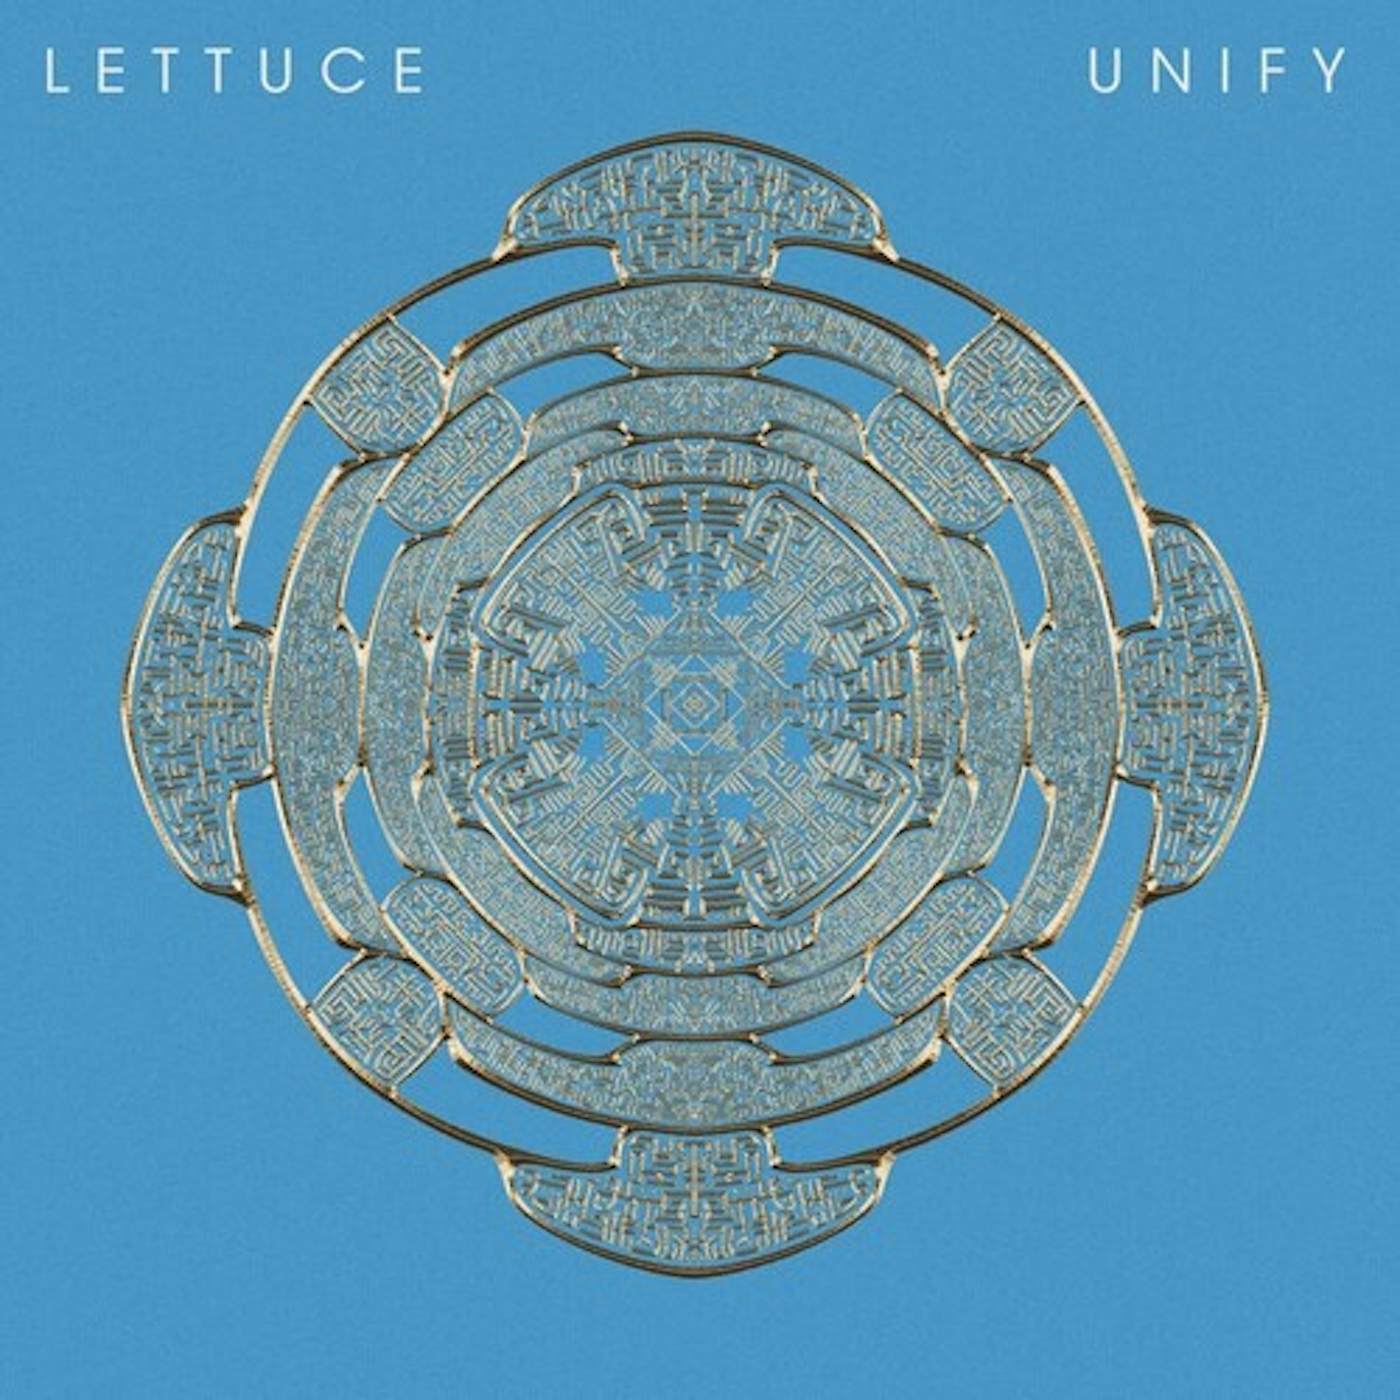 Lettuce Unify Vinyl Record